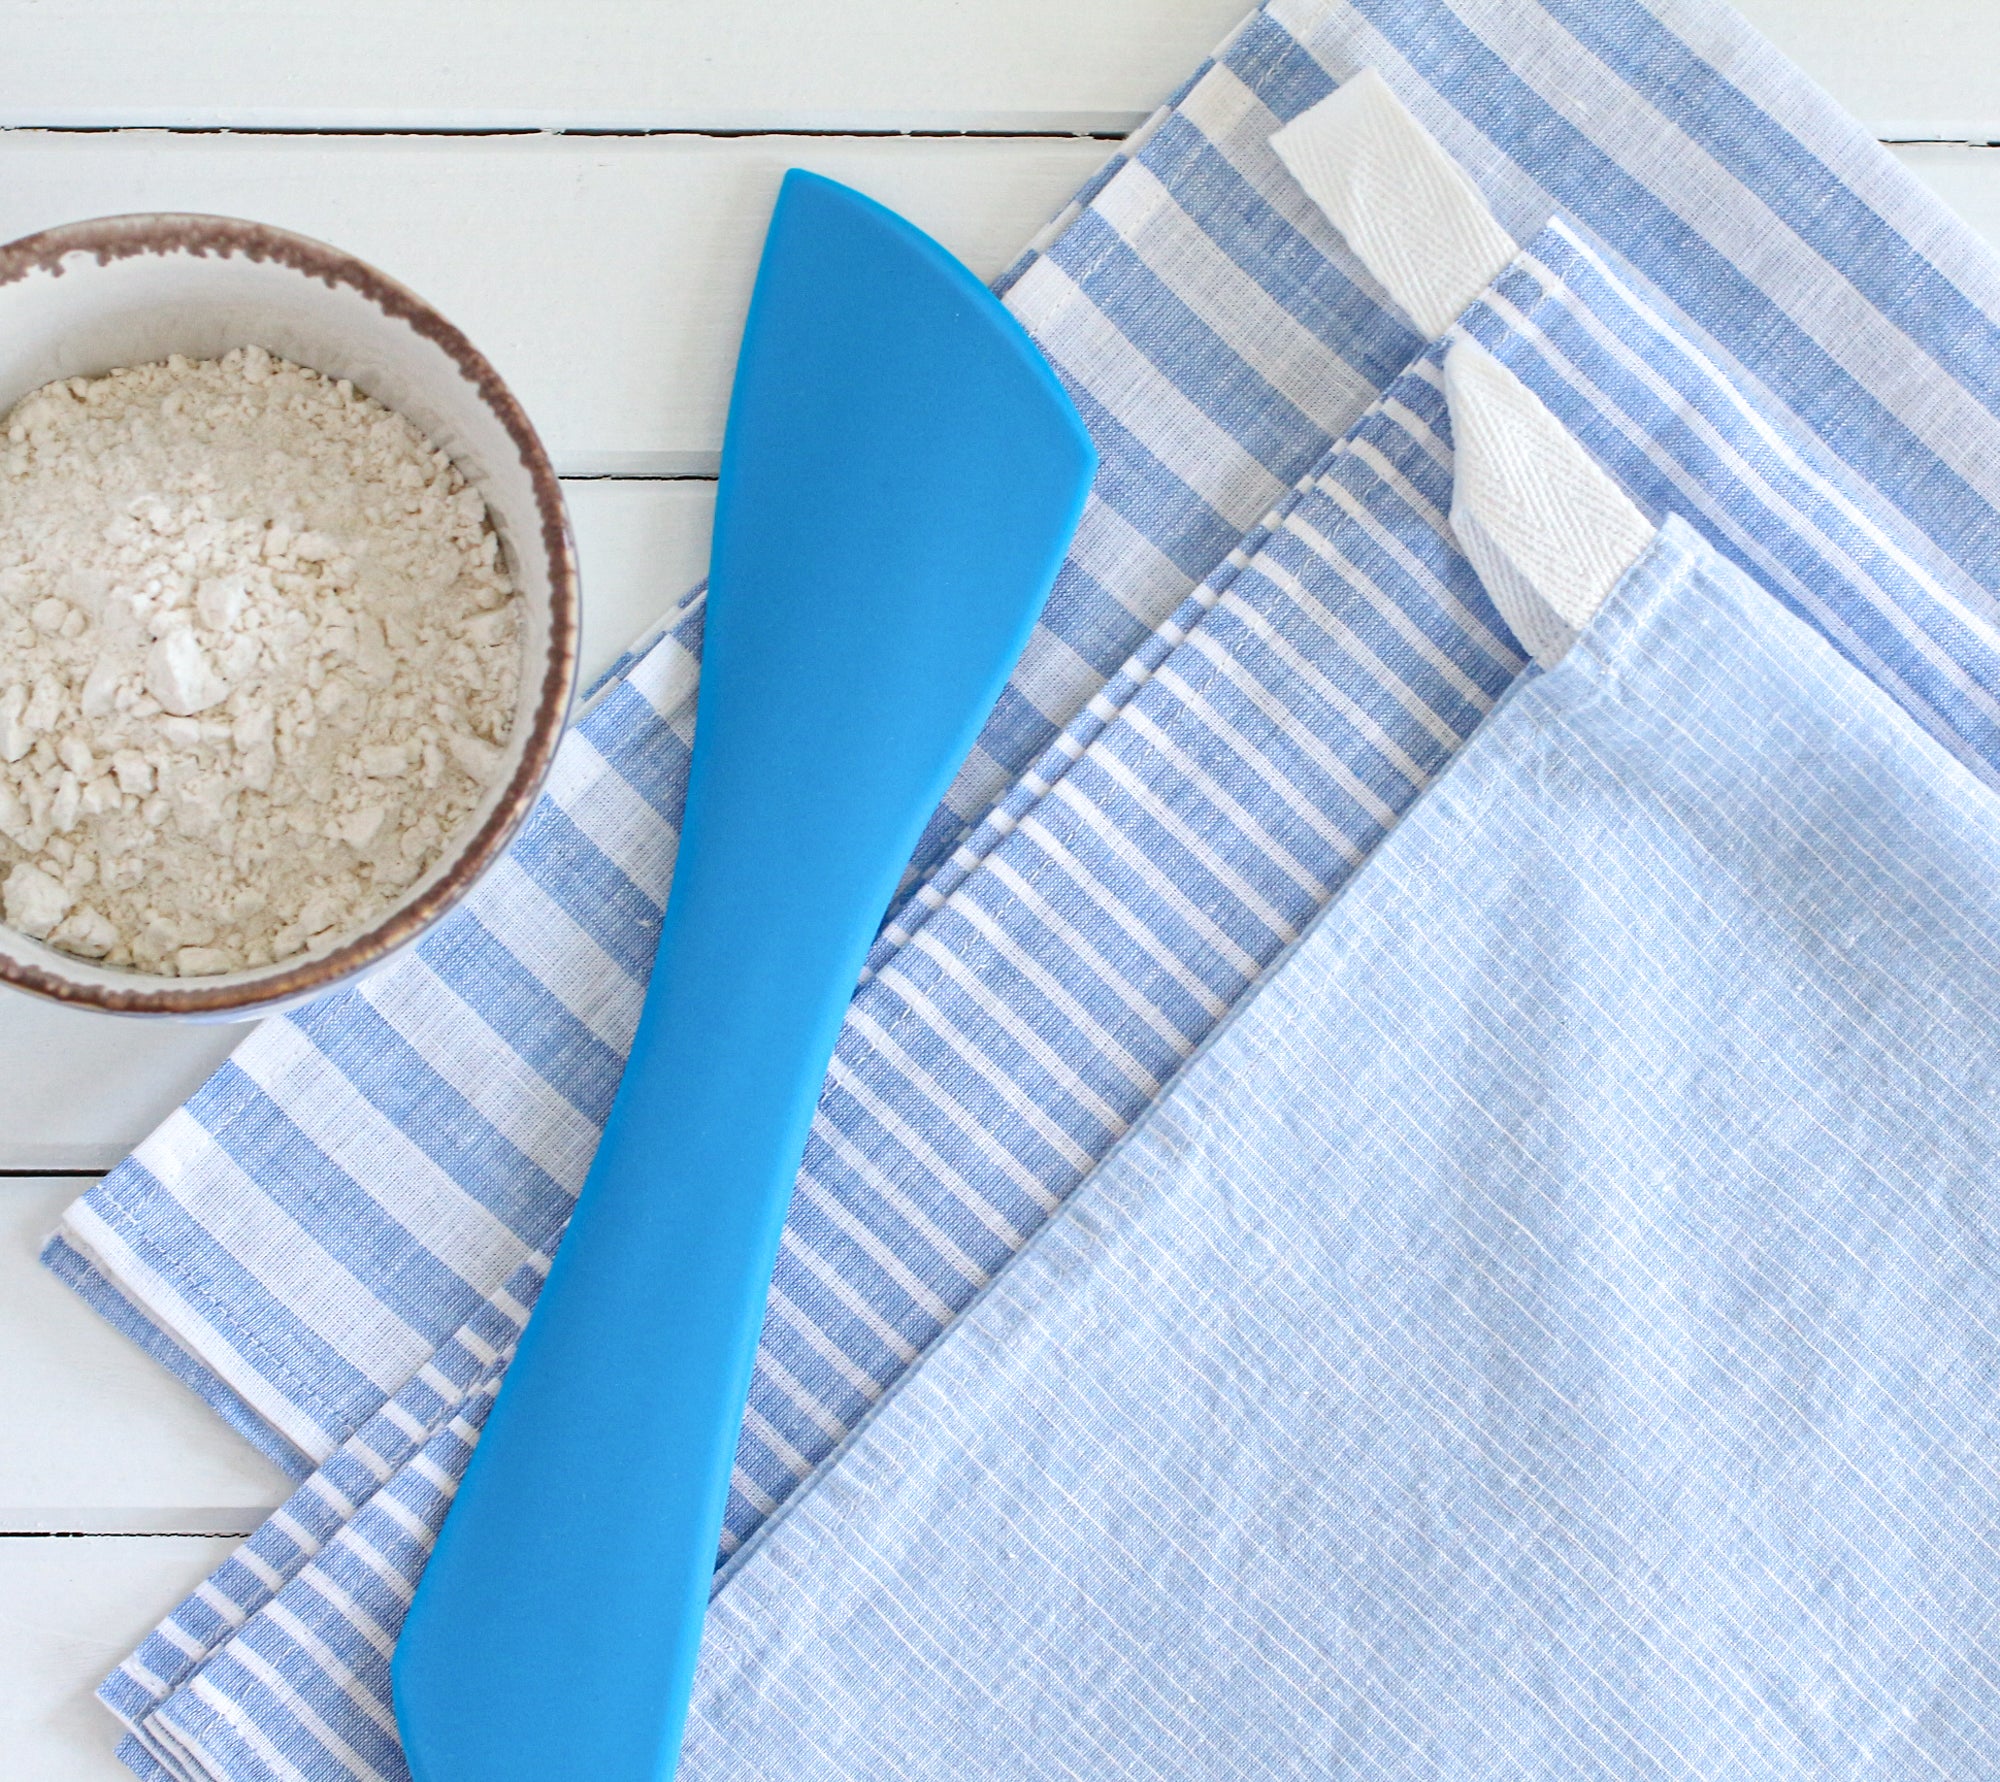 Smoke Gray Linen Tea Towel, Kitchen Towel – My Kitchen Linens